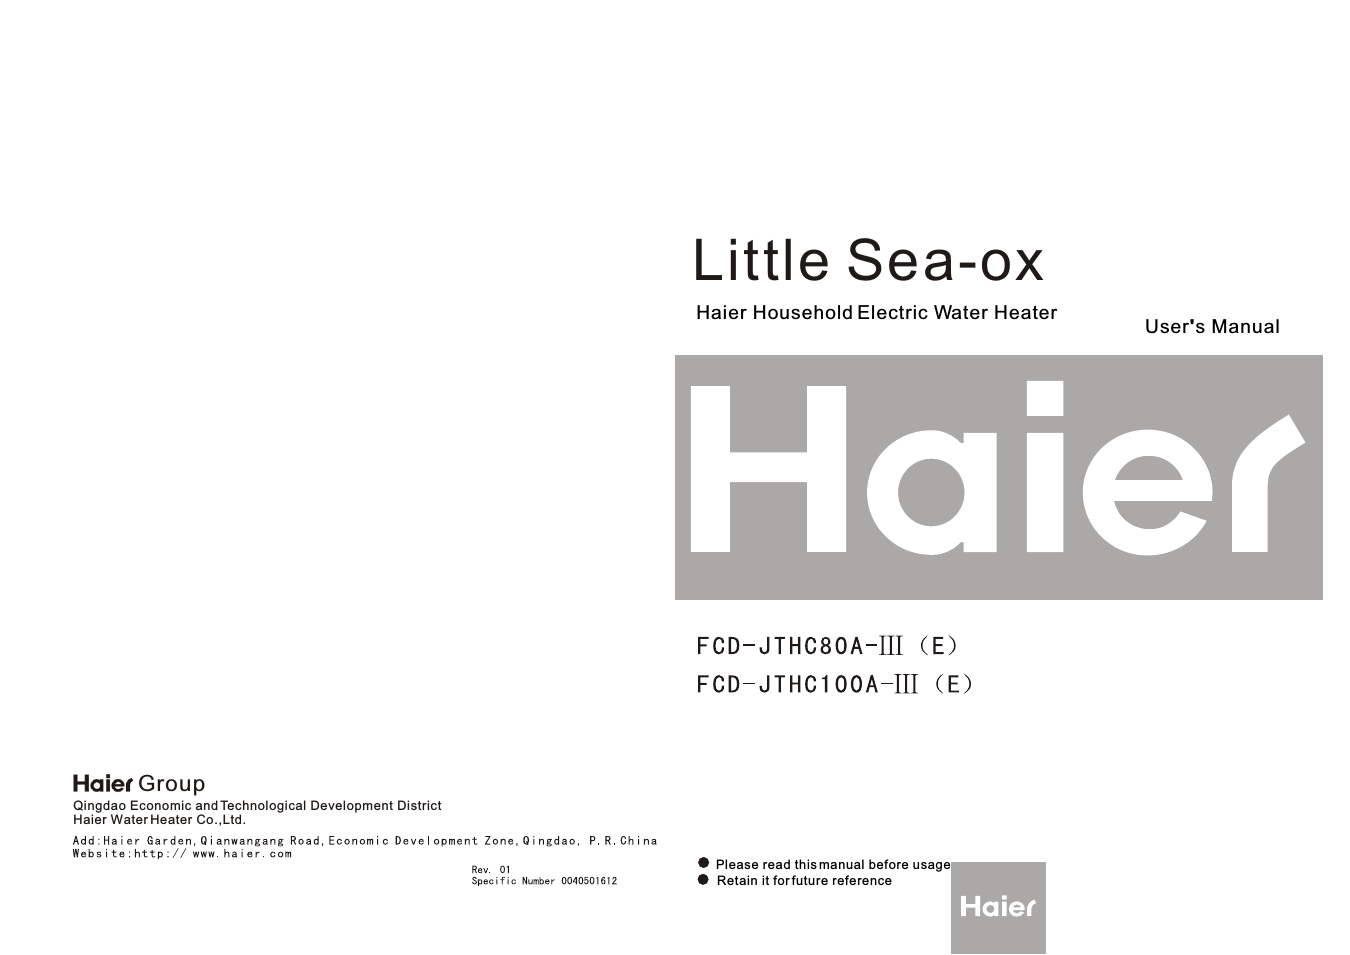 Little Sea-ox FCD-JTHC80A-III (E)